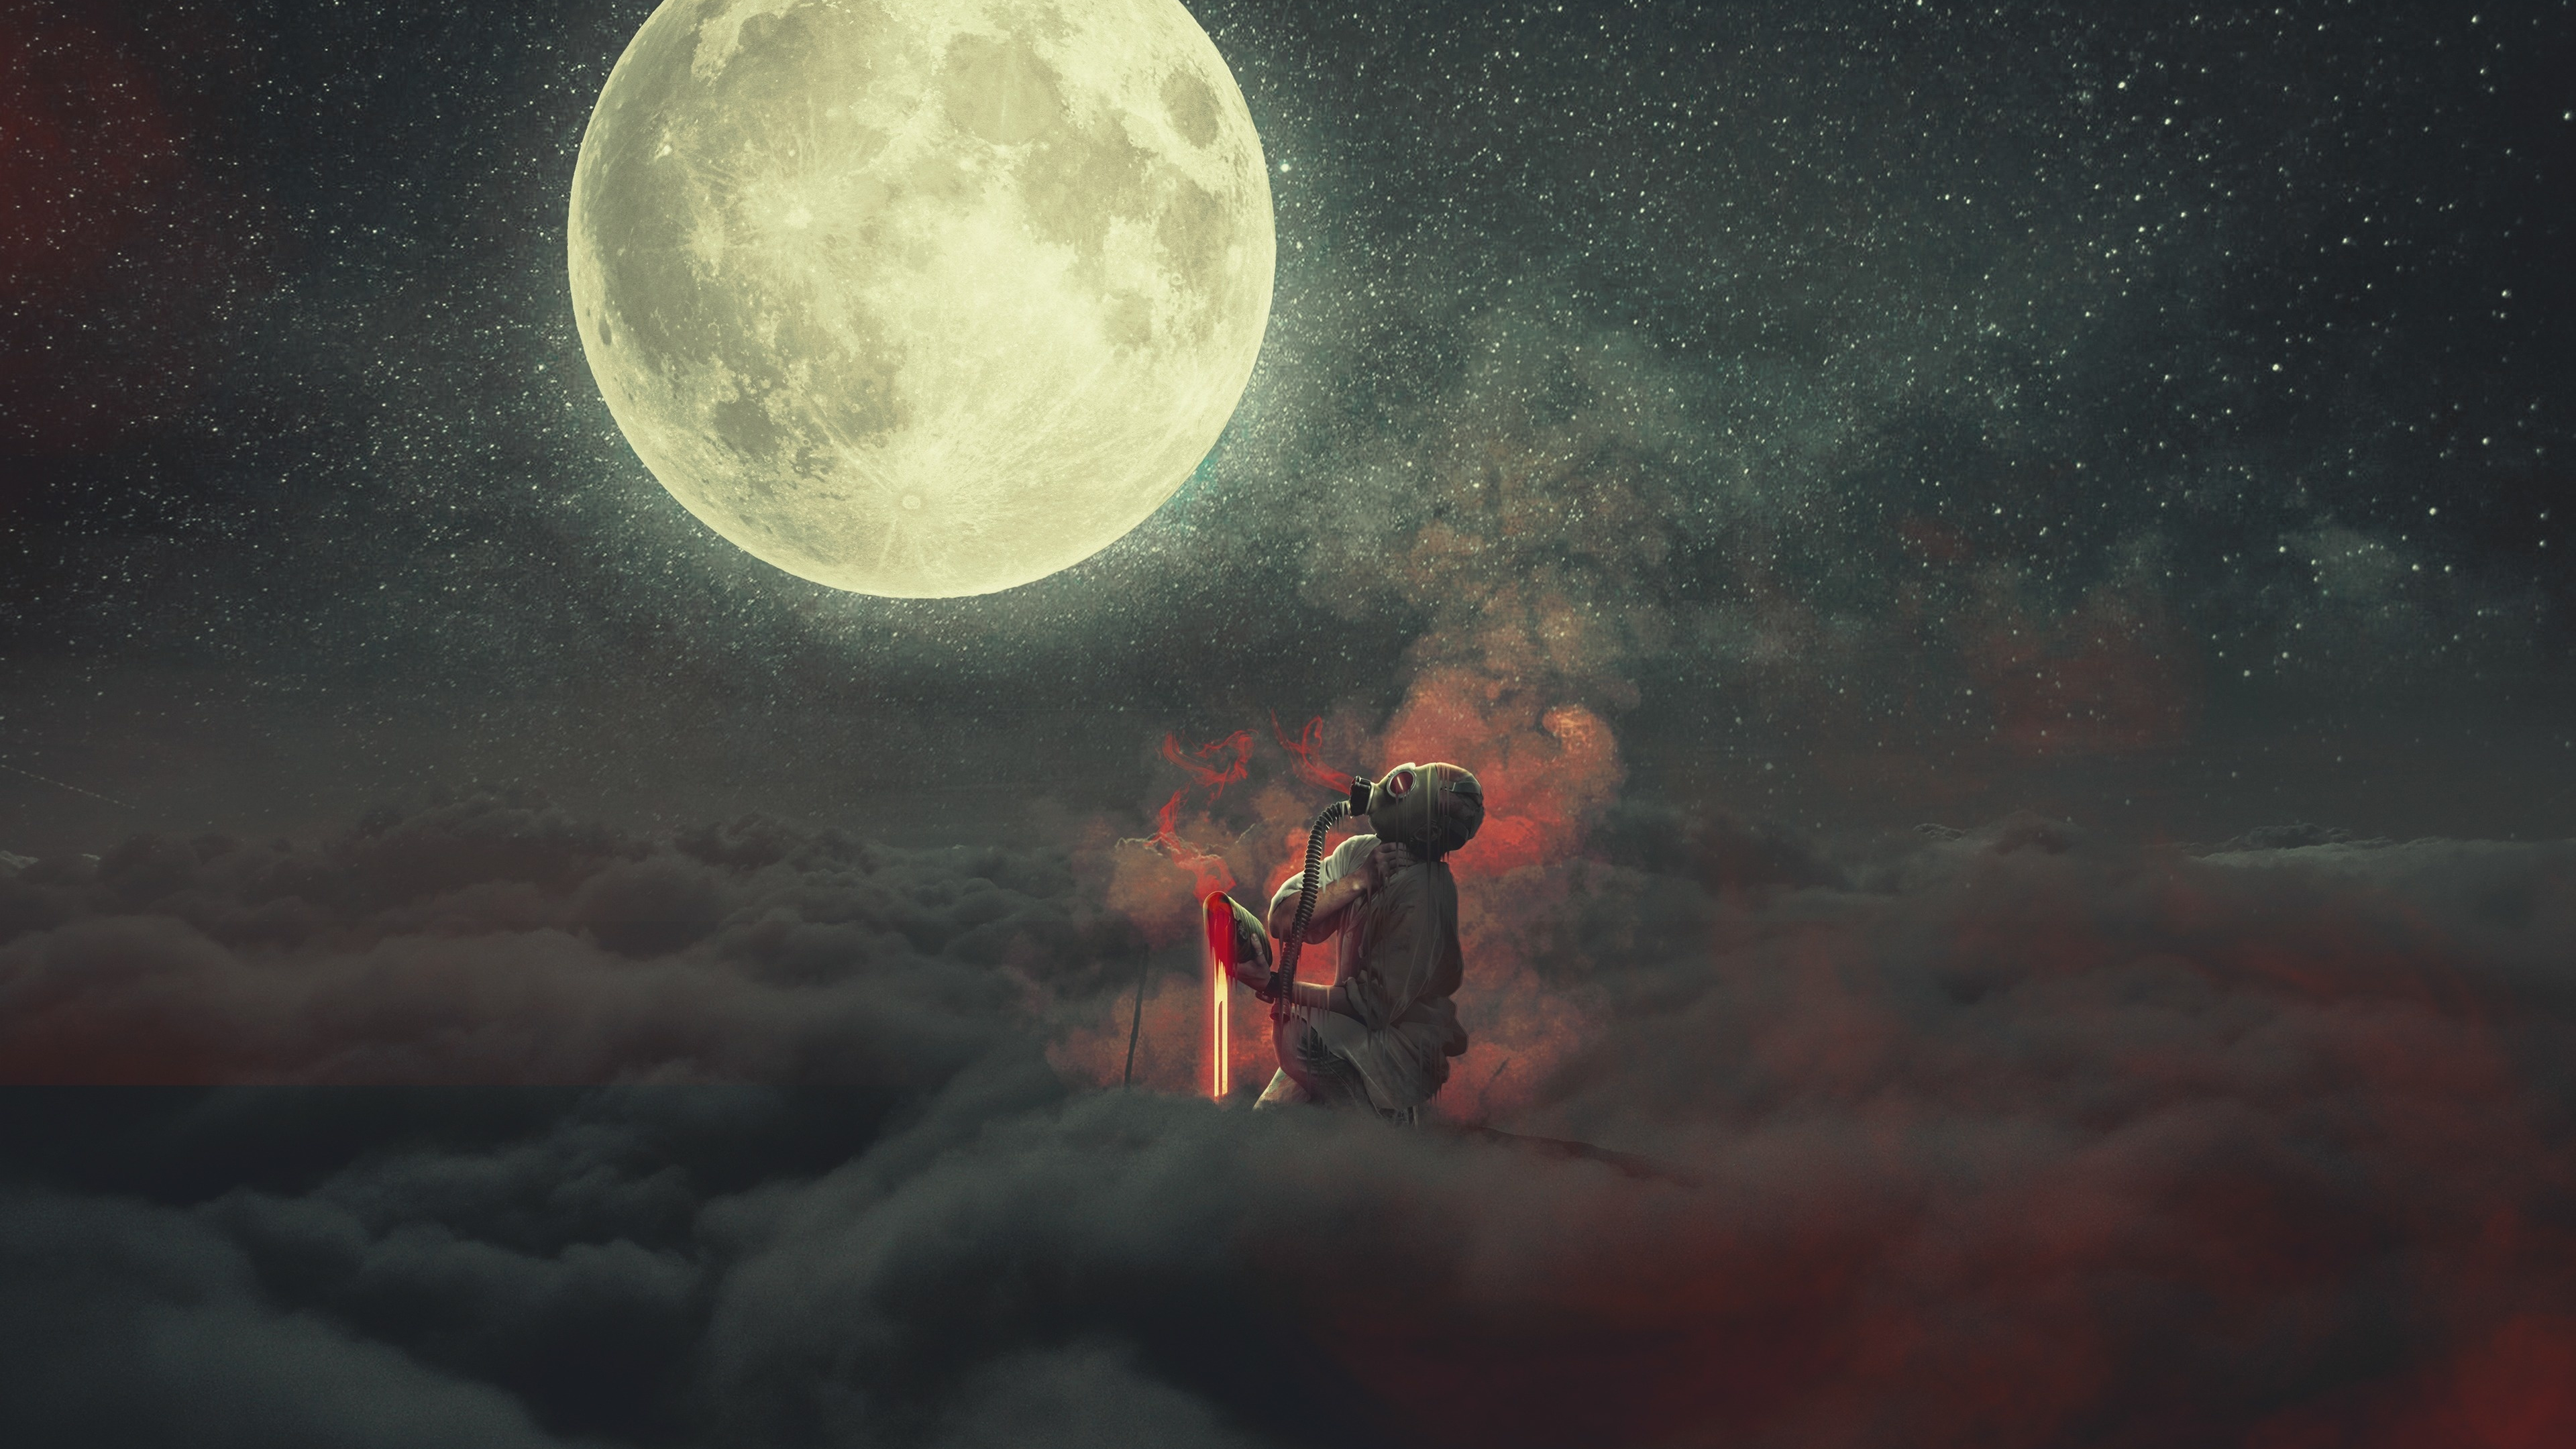 Download 3840x2160 Wallpaper Demon Dream Clouds Moon Fantasy 4k